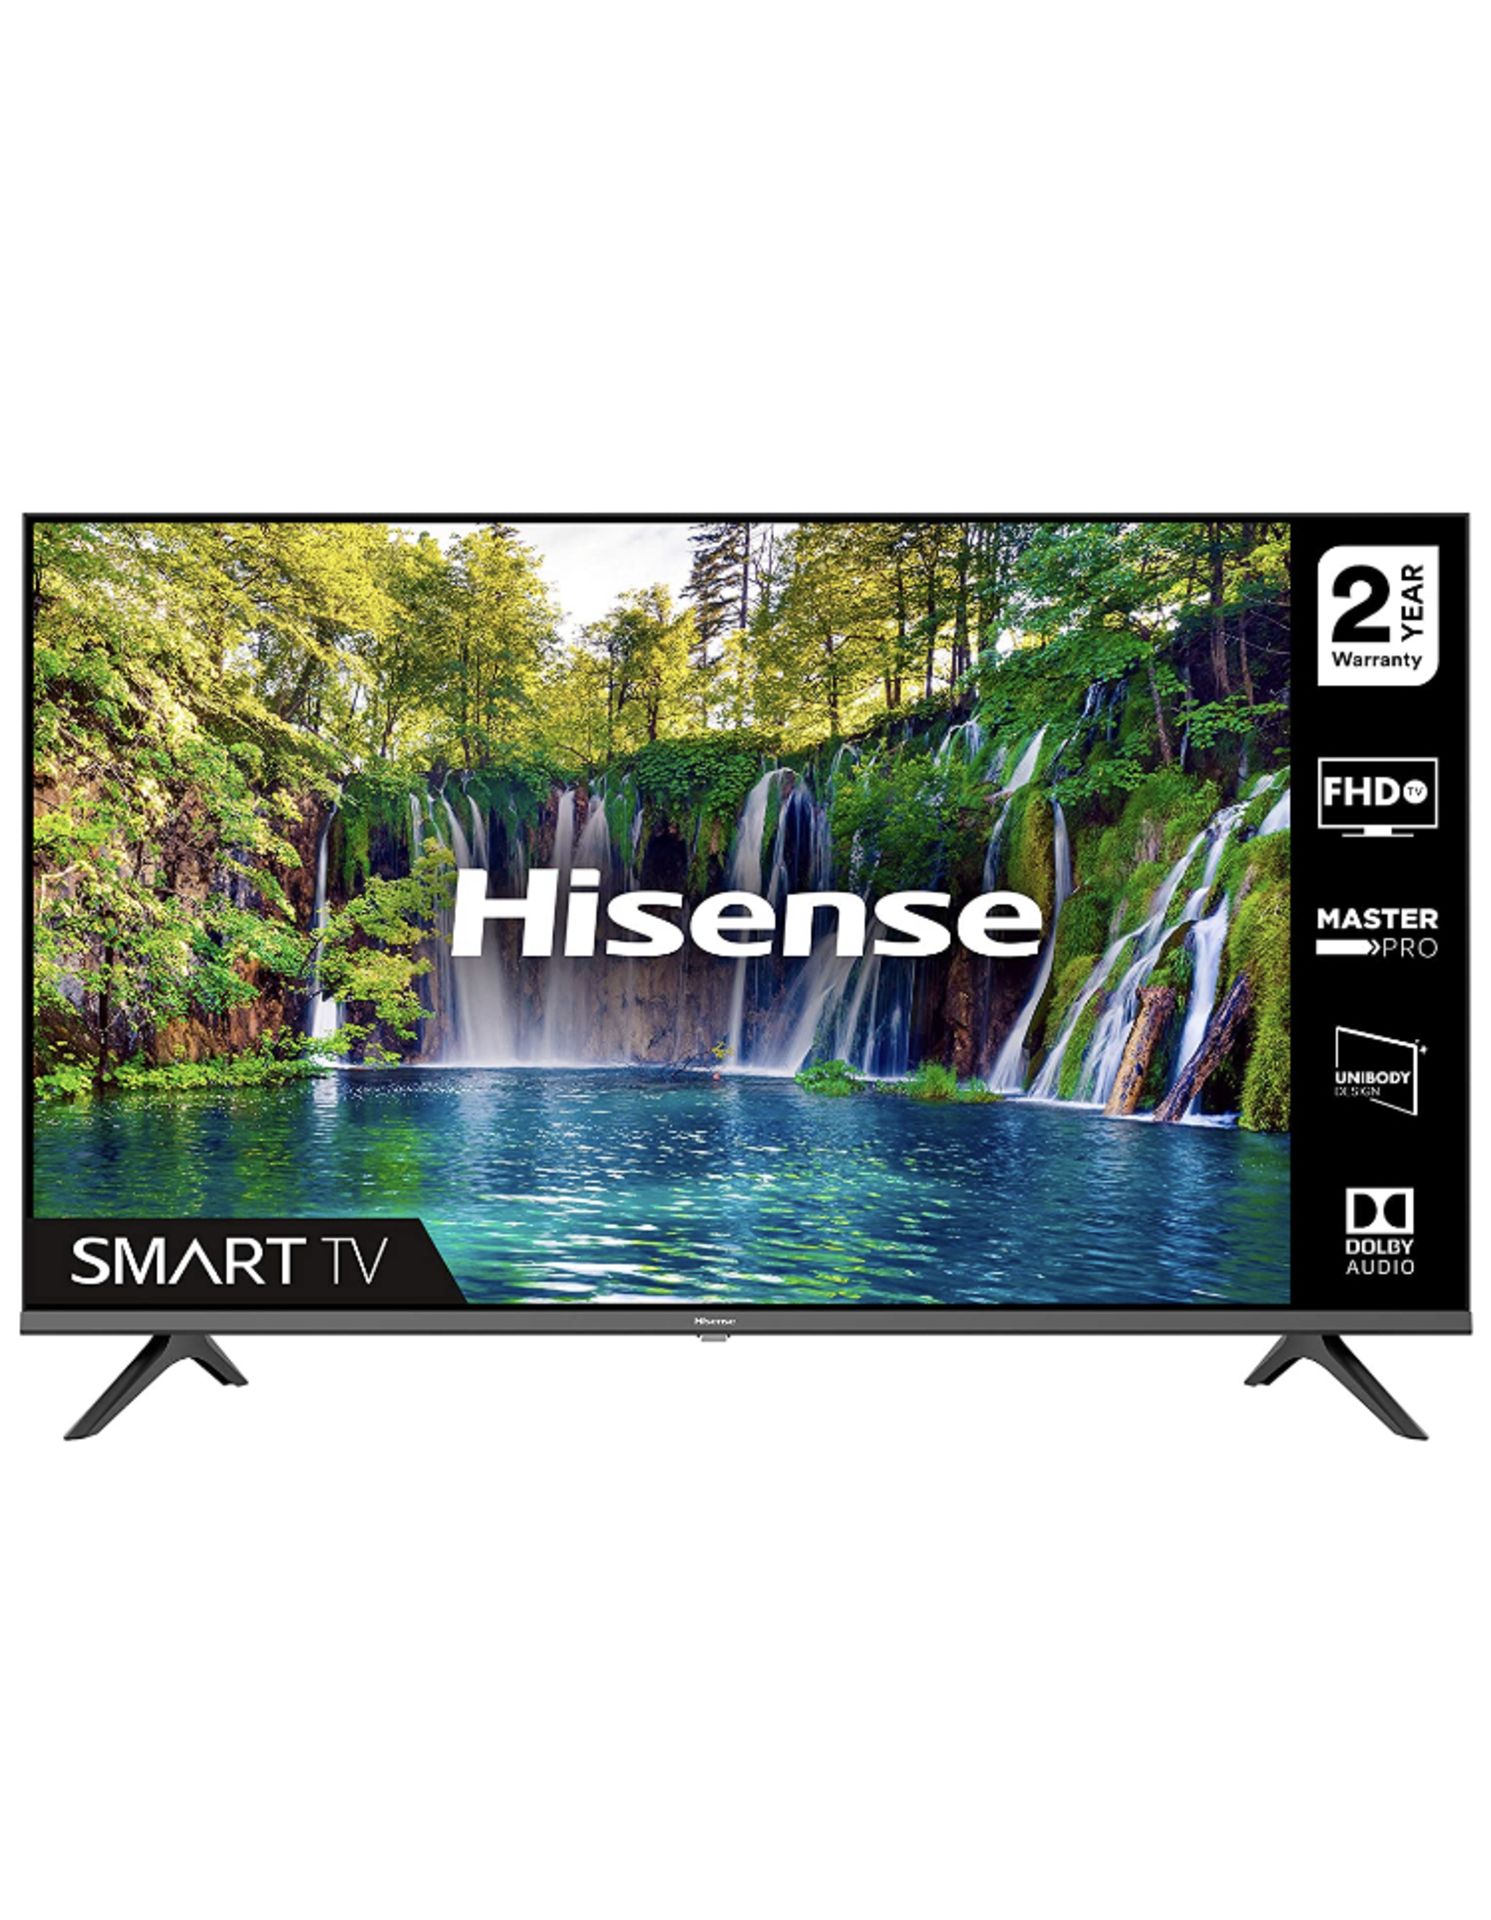 Hisense 40 inch tv